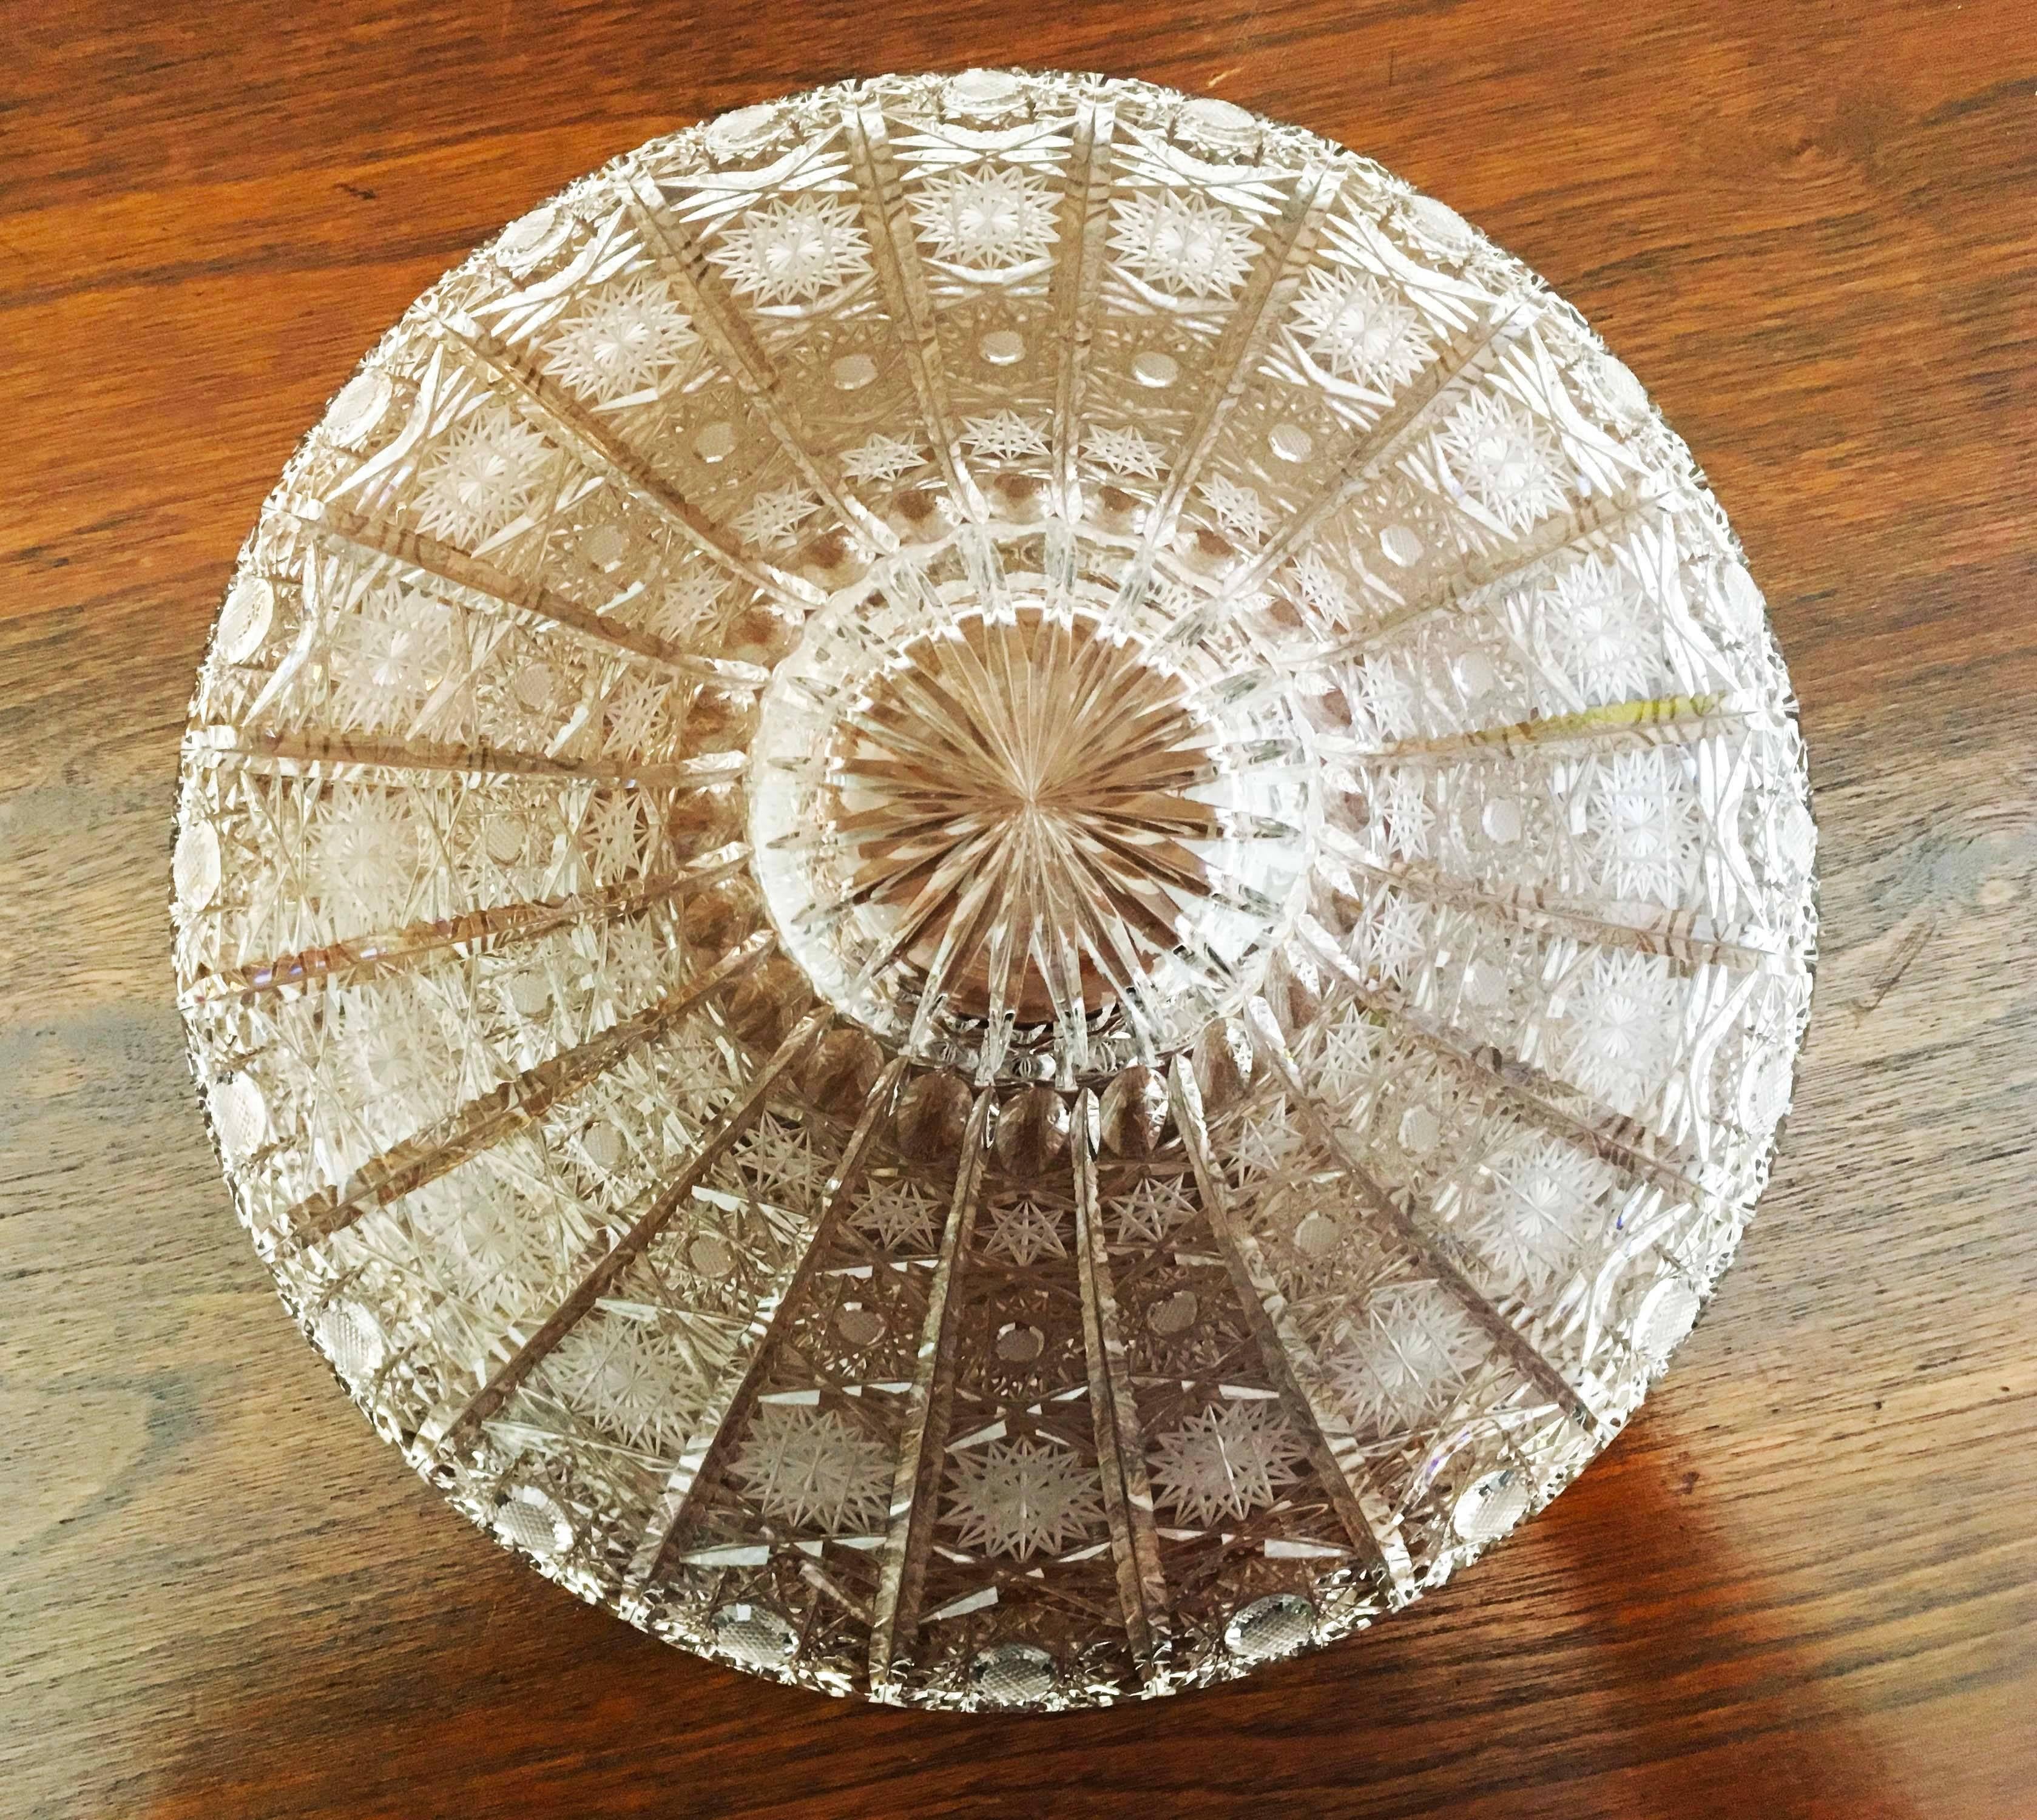 Stunning Bohemin Cut Crystal Centrepiece Bowl For Sale 1